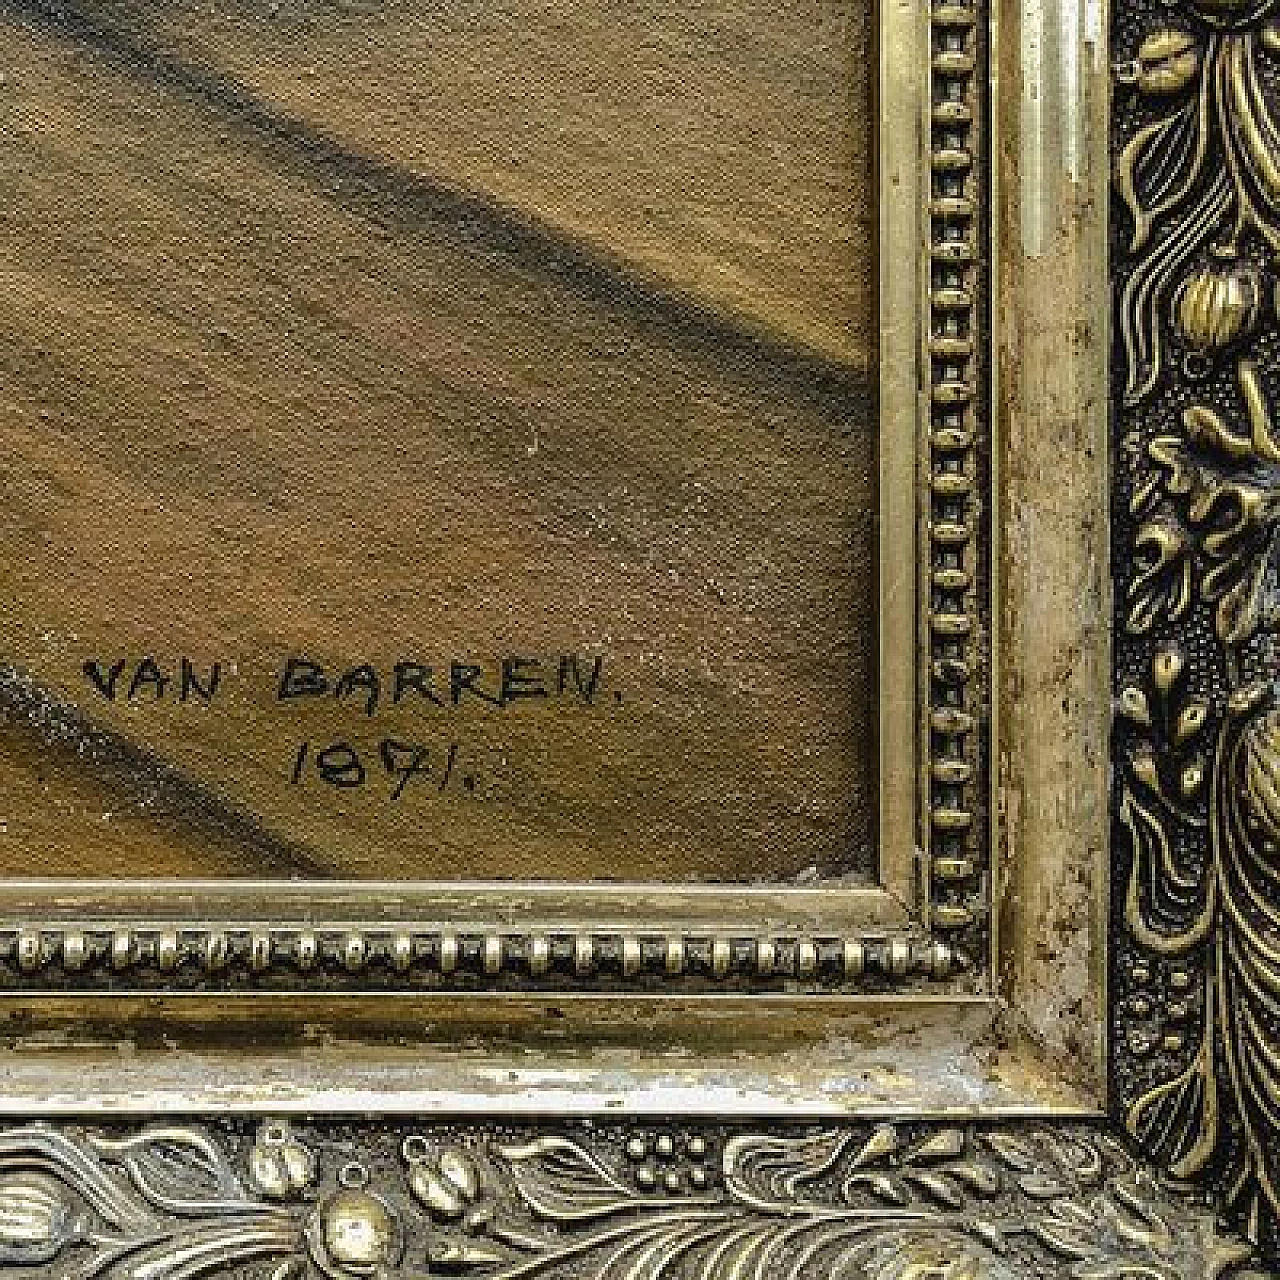 Van Barren, Children and rabbits, oil painting on canvas cardboard, 1871 9